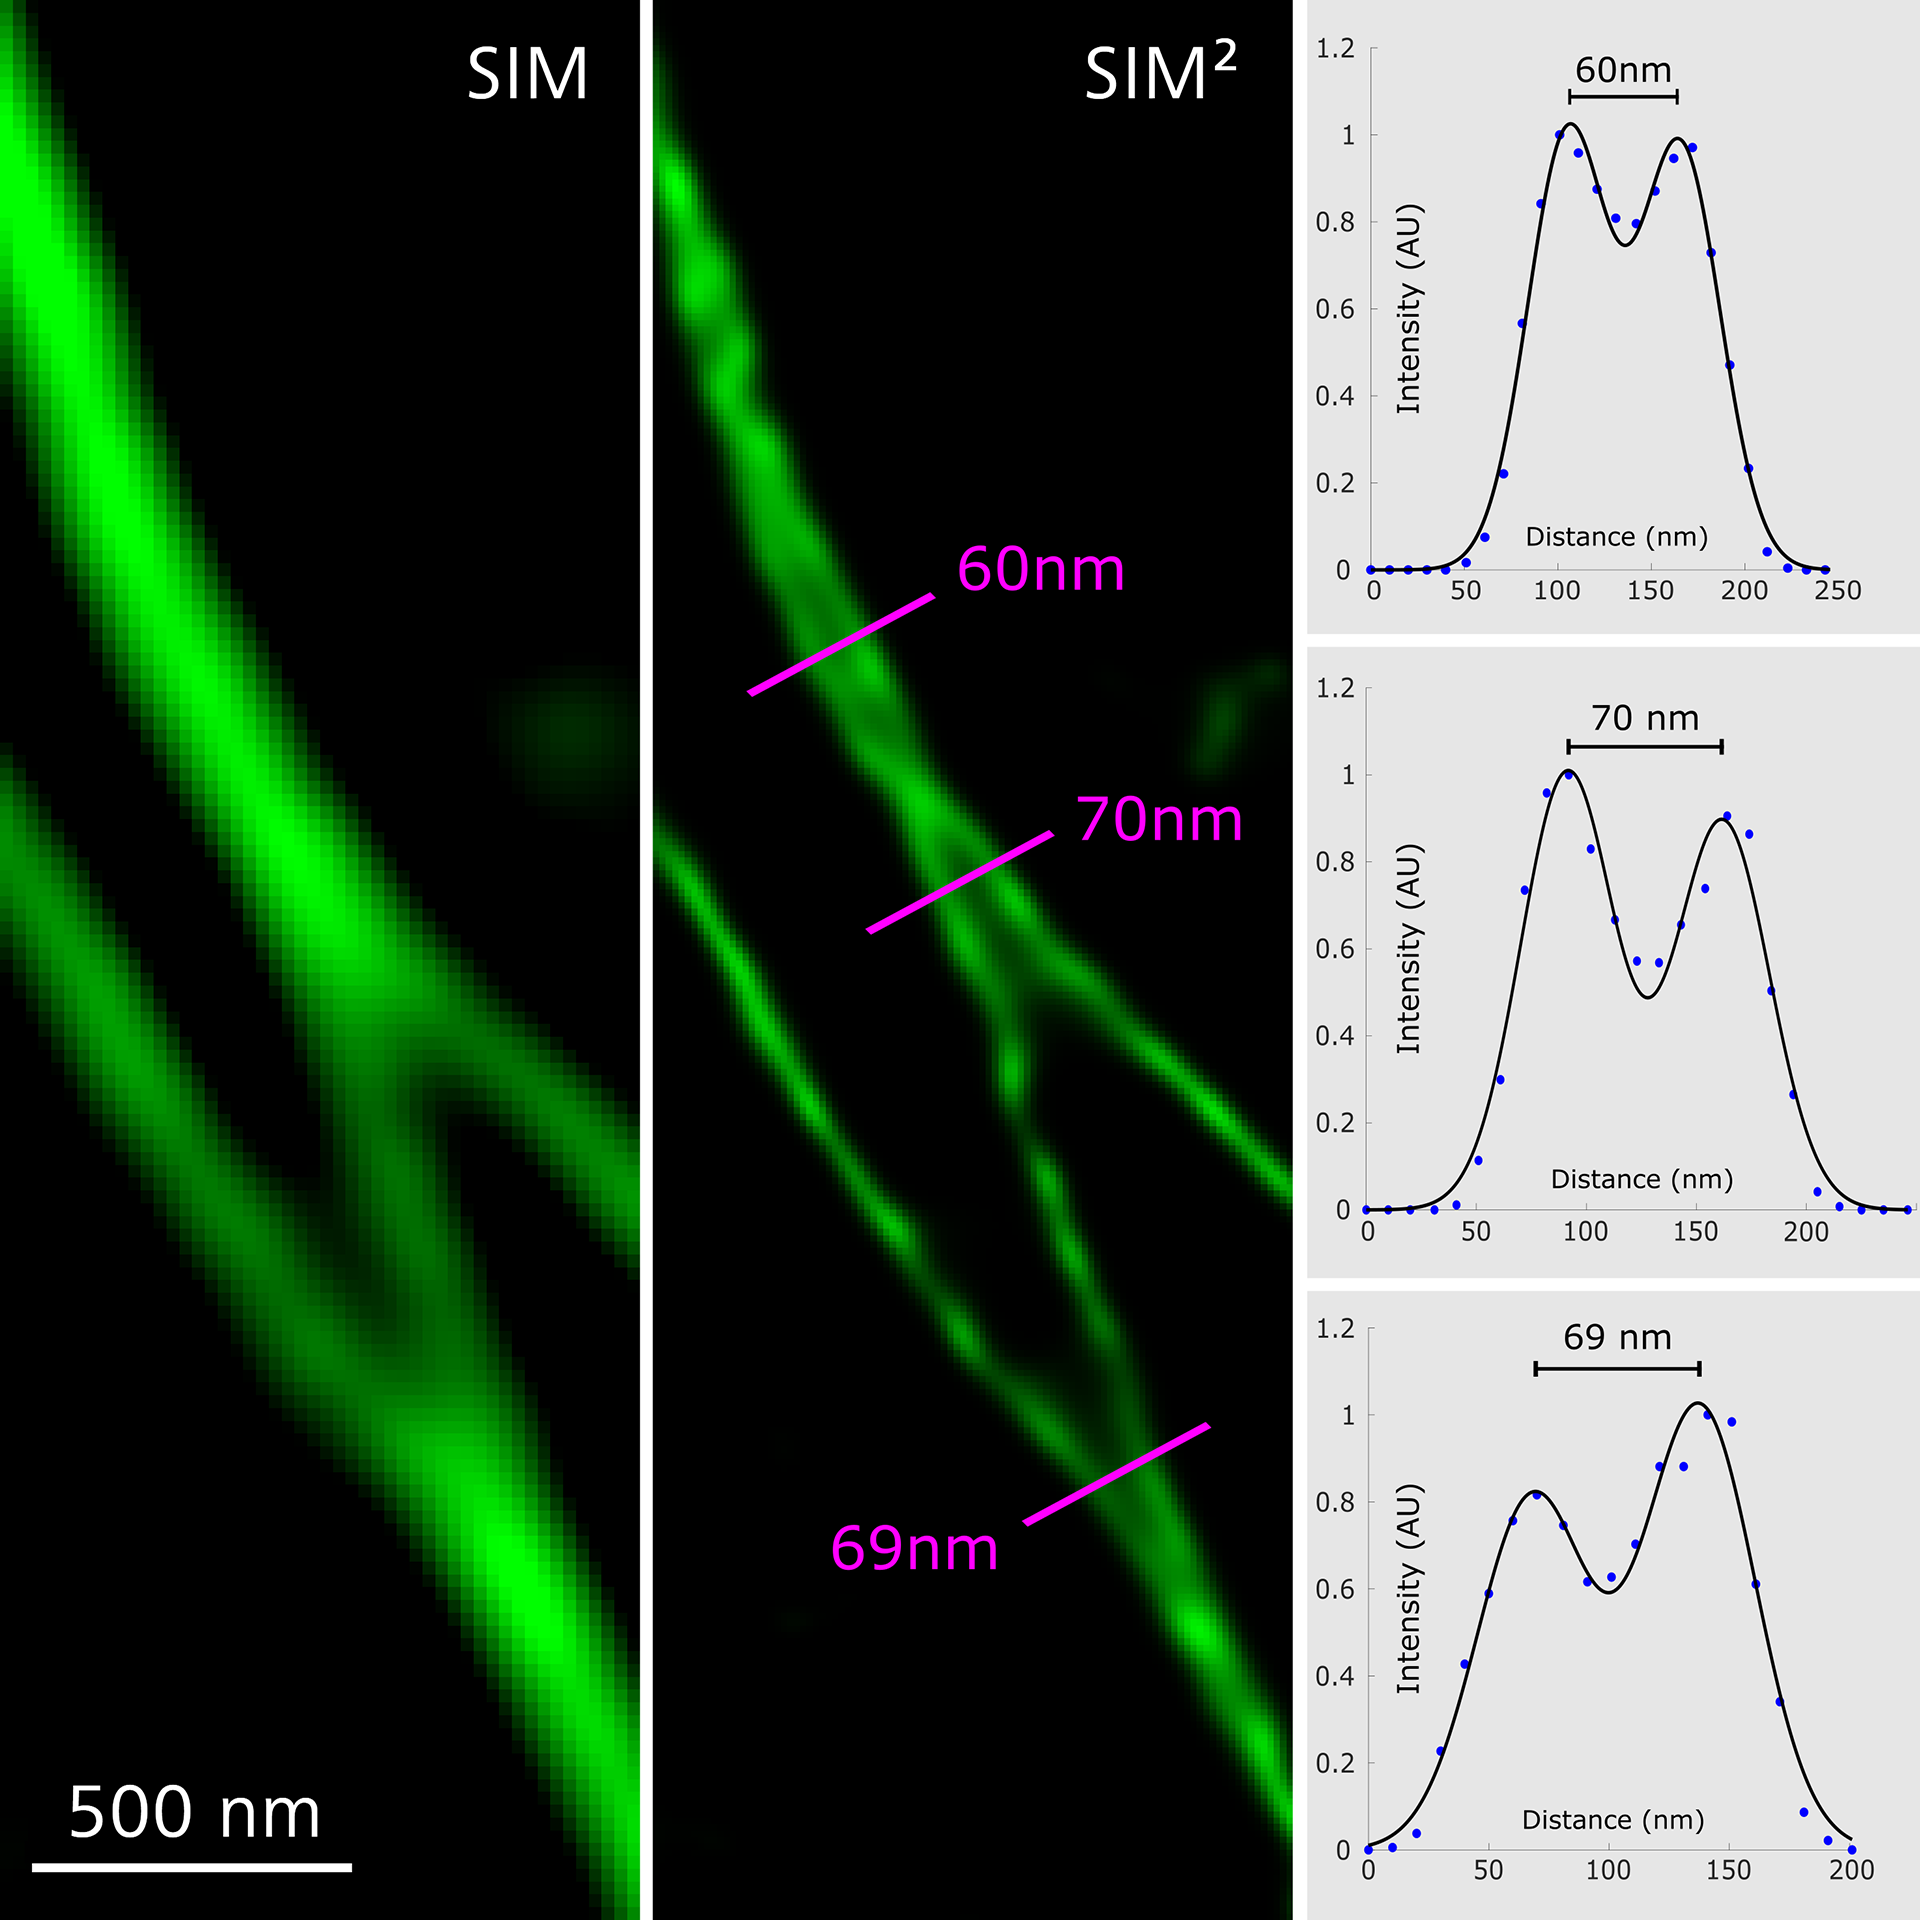 Cos-7细胞用α-微管蛋白抗体Alexa fluor 488染色，使用基于广义维纳滤波器的传统SIM算法以及新型SIM²重构技术来处理其图像。图像显示与SIM相比，SIM²的分辨率得到提高。物镜：Plan-Apochromat 63× / 1.4 Oil。